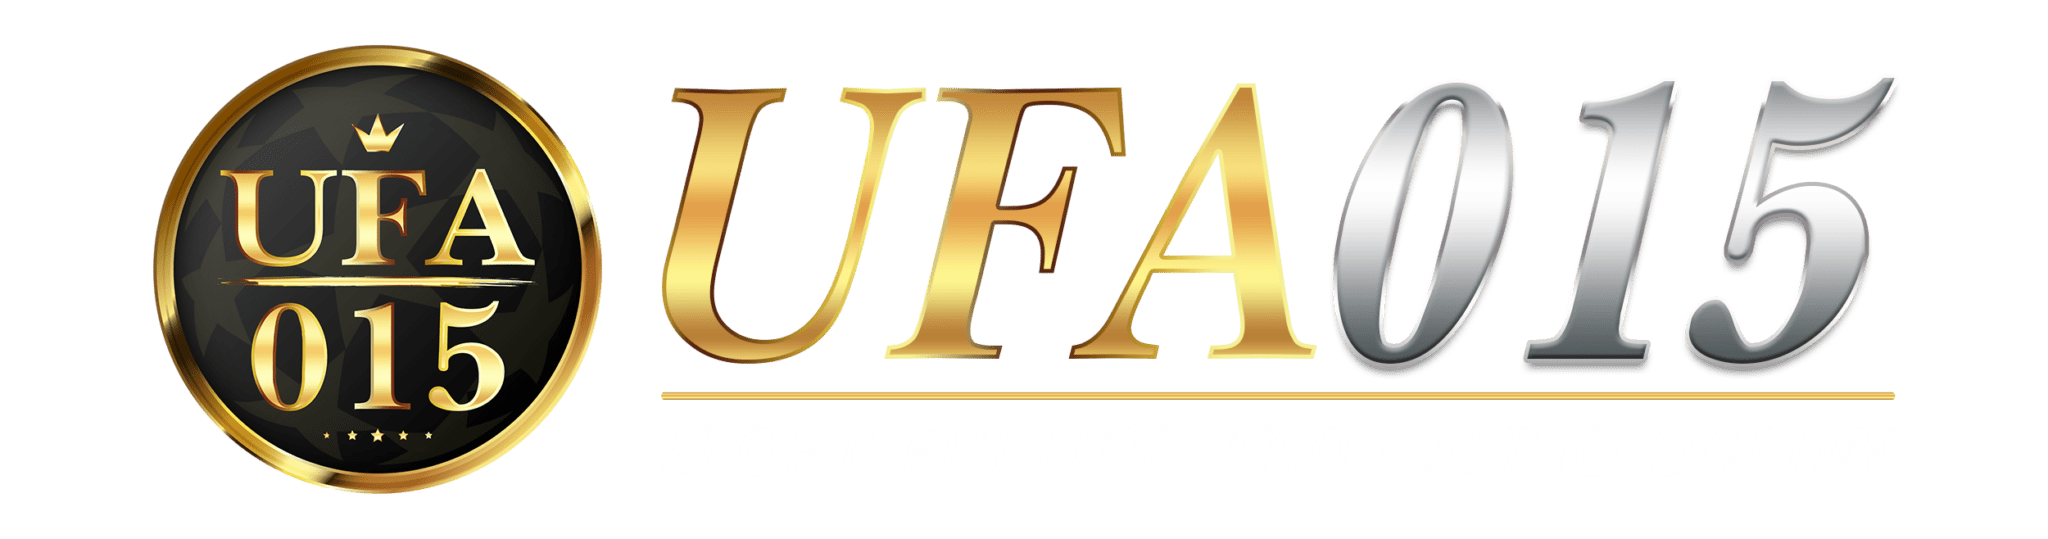 UFA015 logo